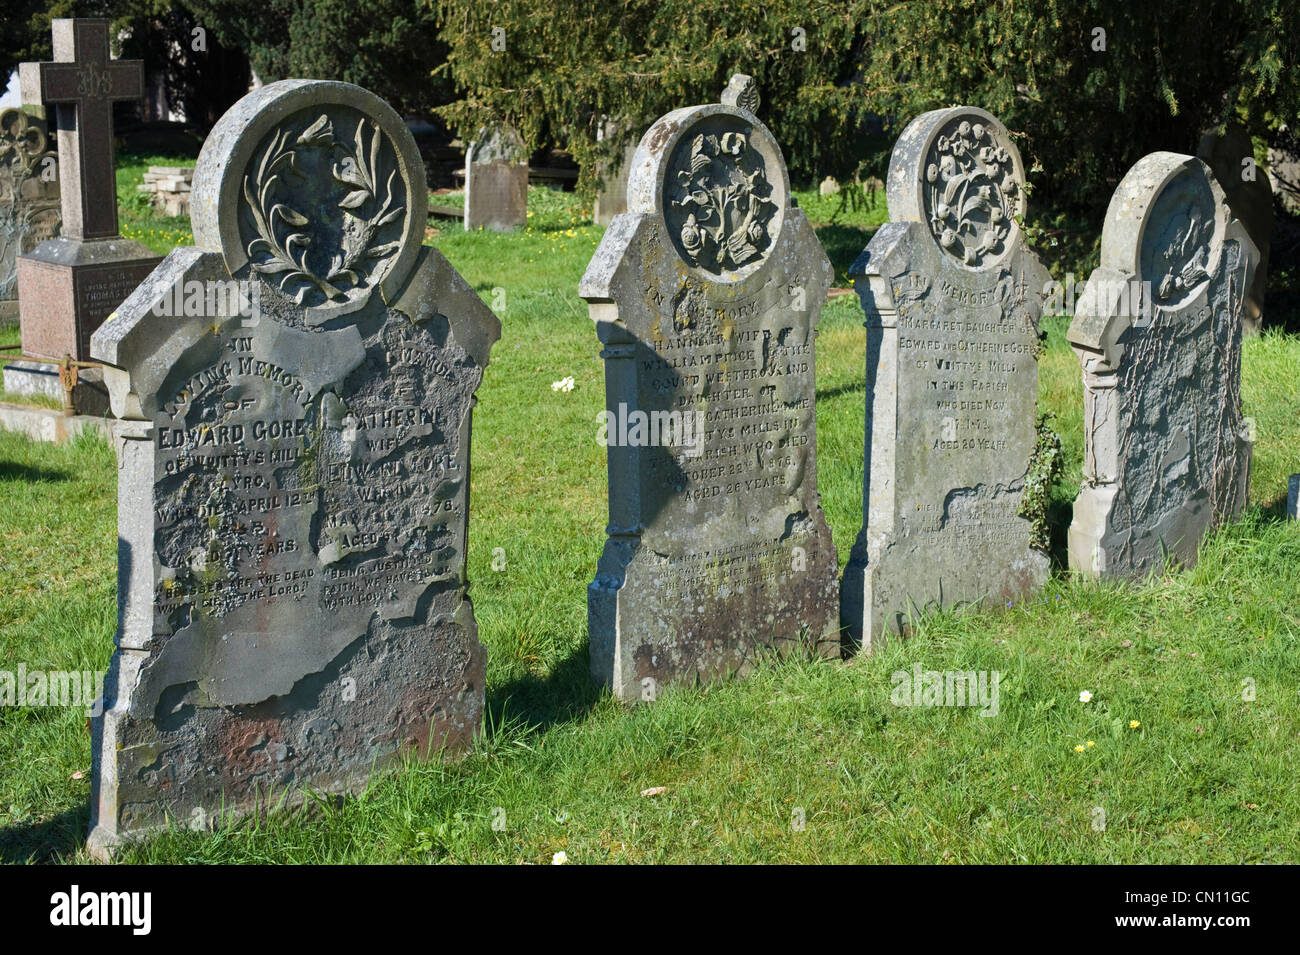 Family gravestones in graveyard of Clyro Church Powys Wales UK Stock Photo